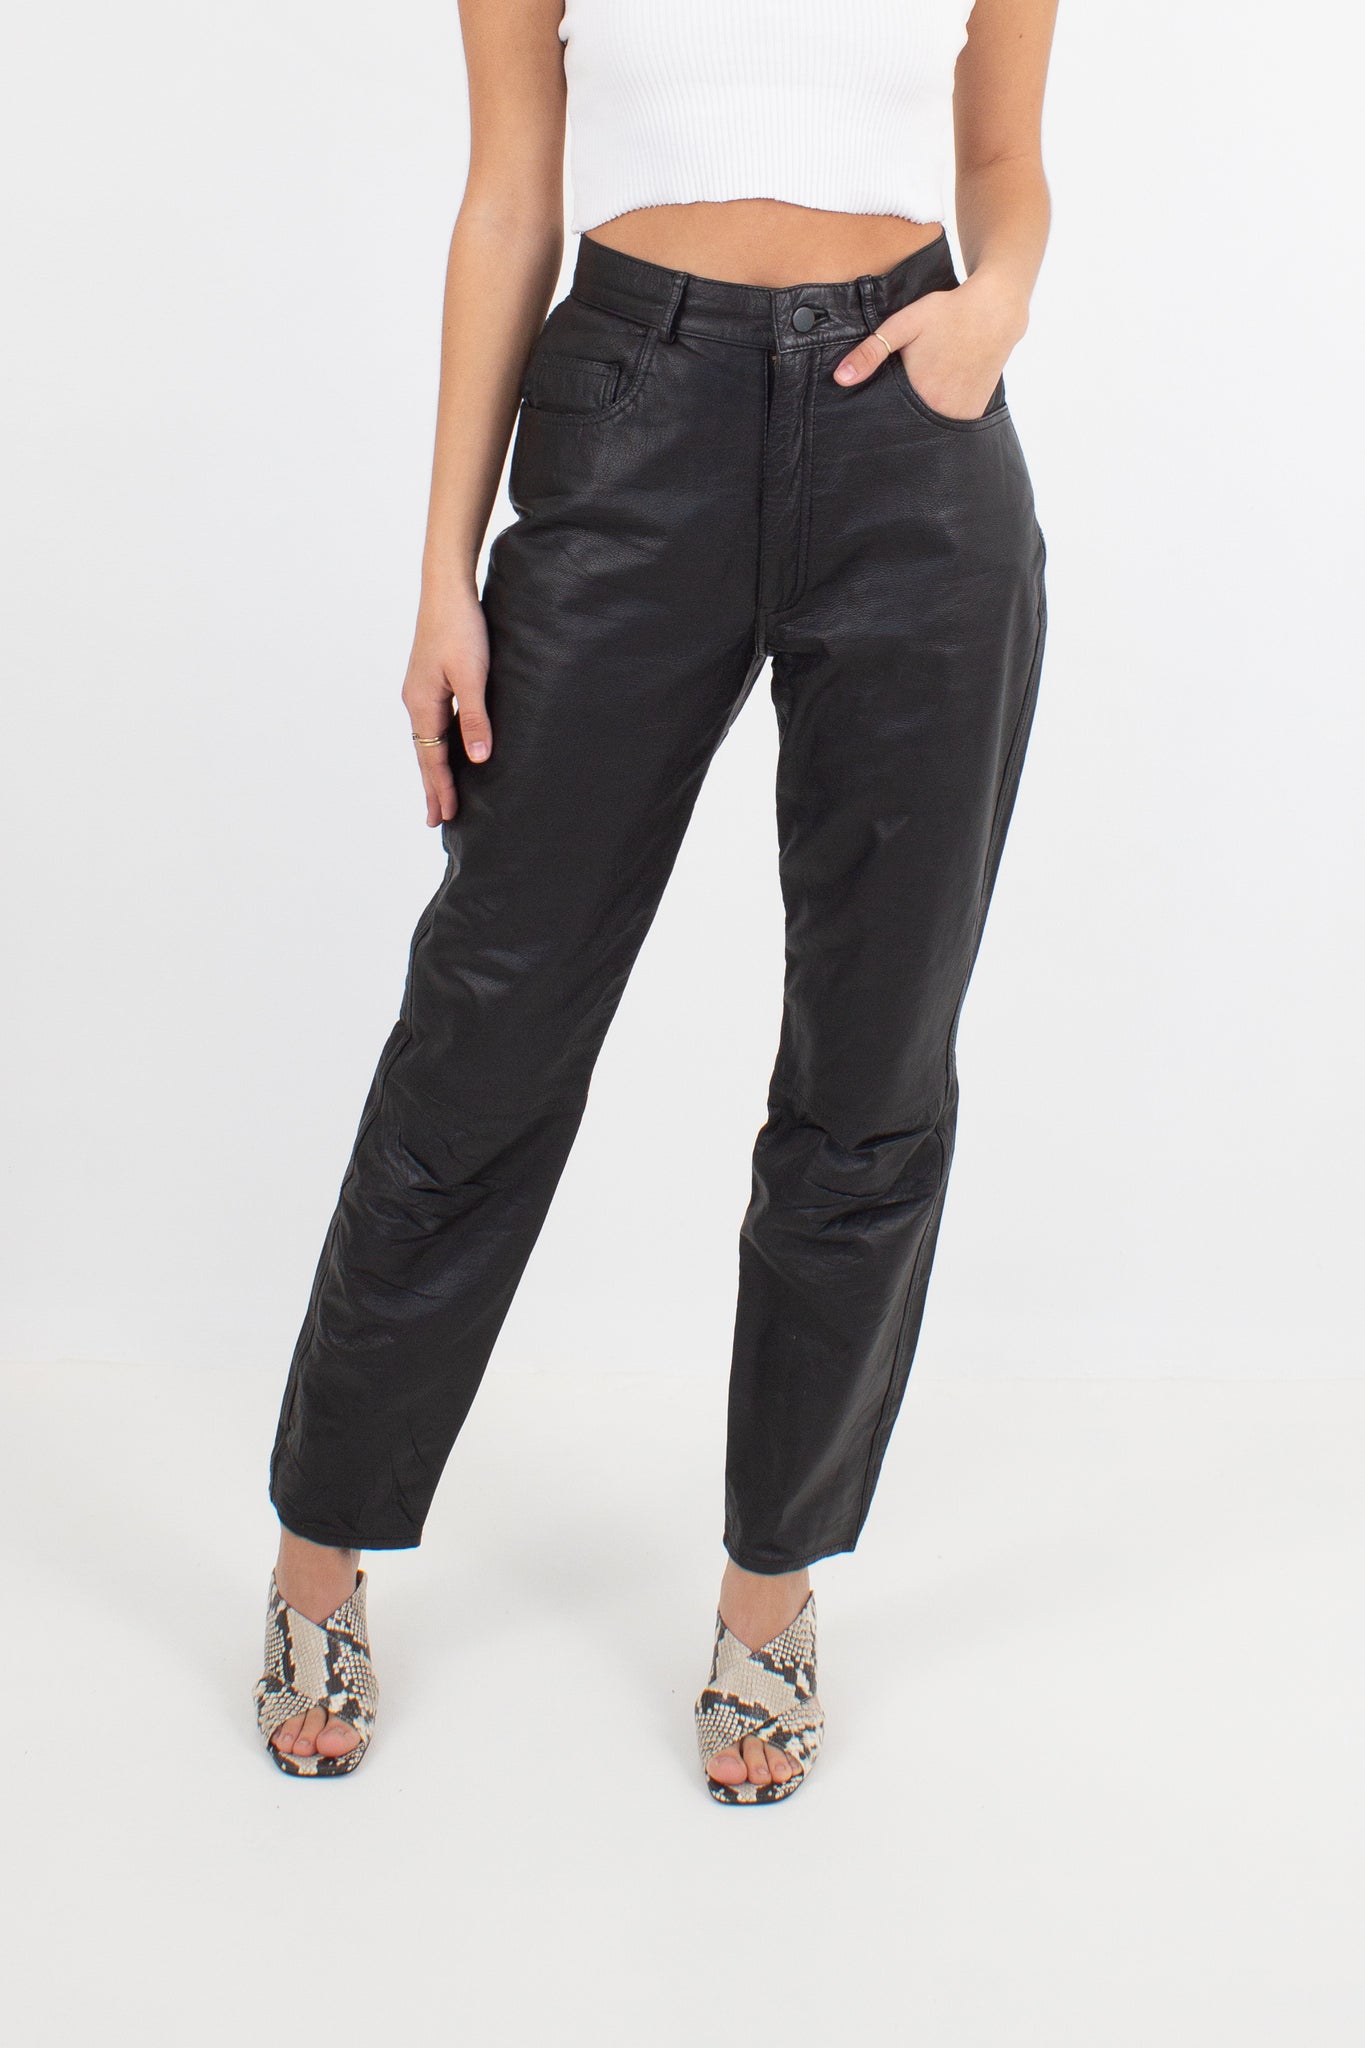 Black Leather High Waist Pants - Size S / 26"